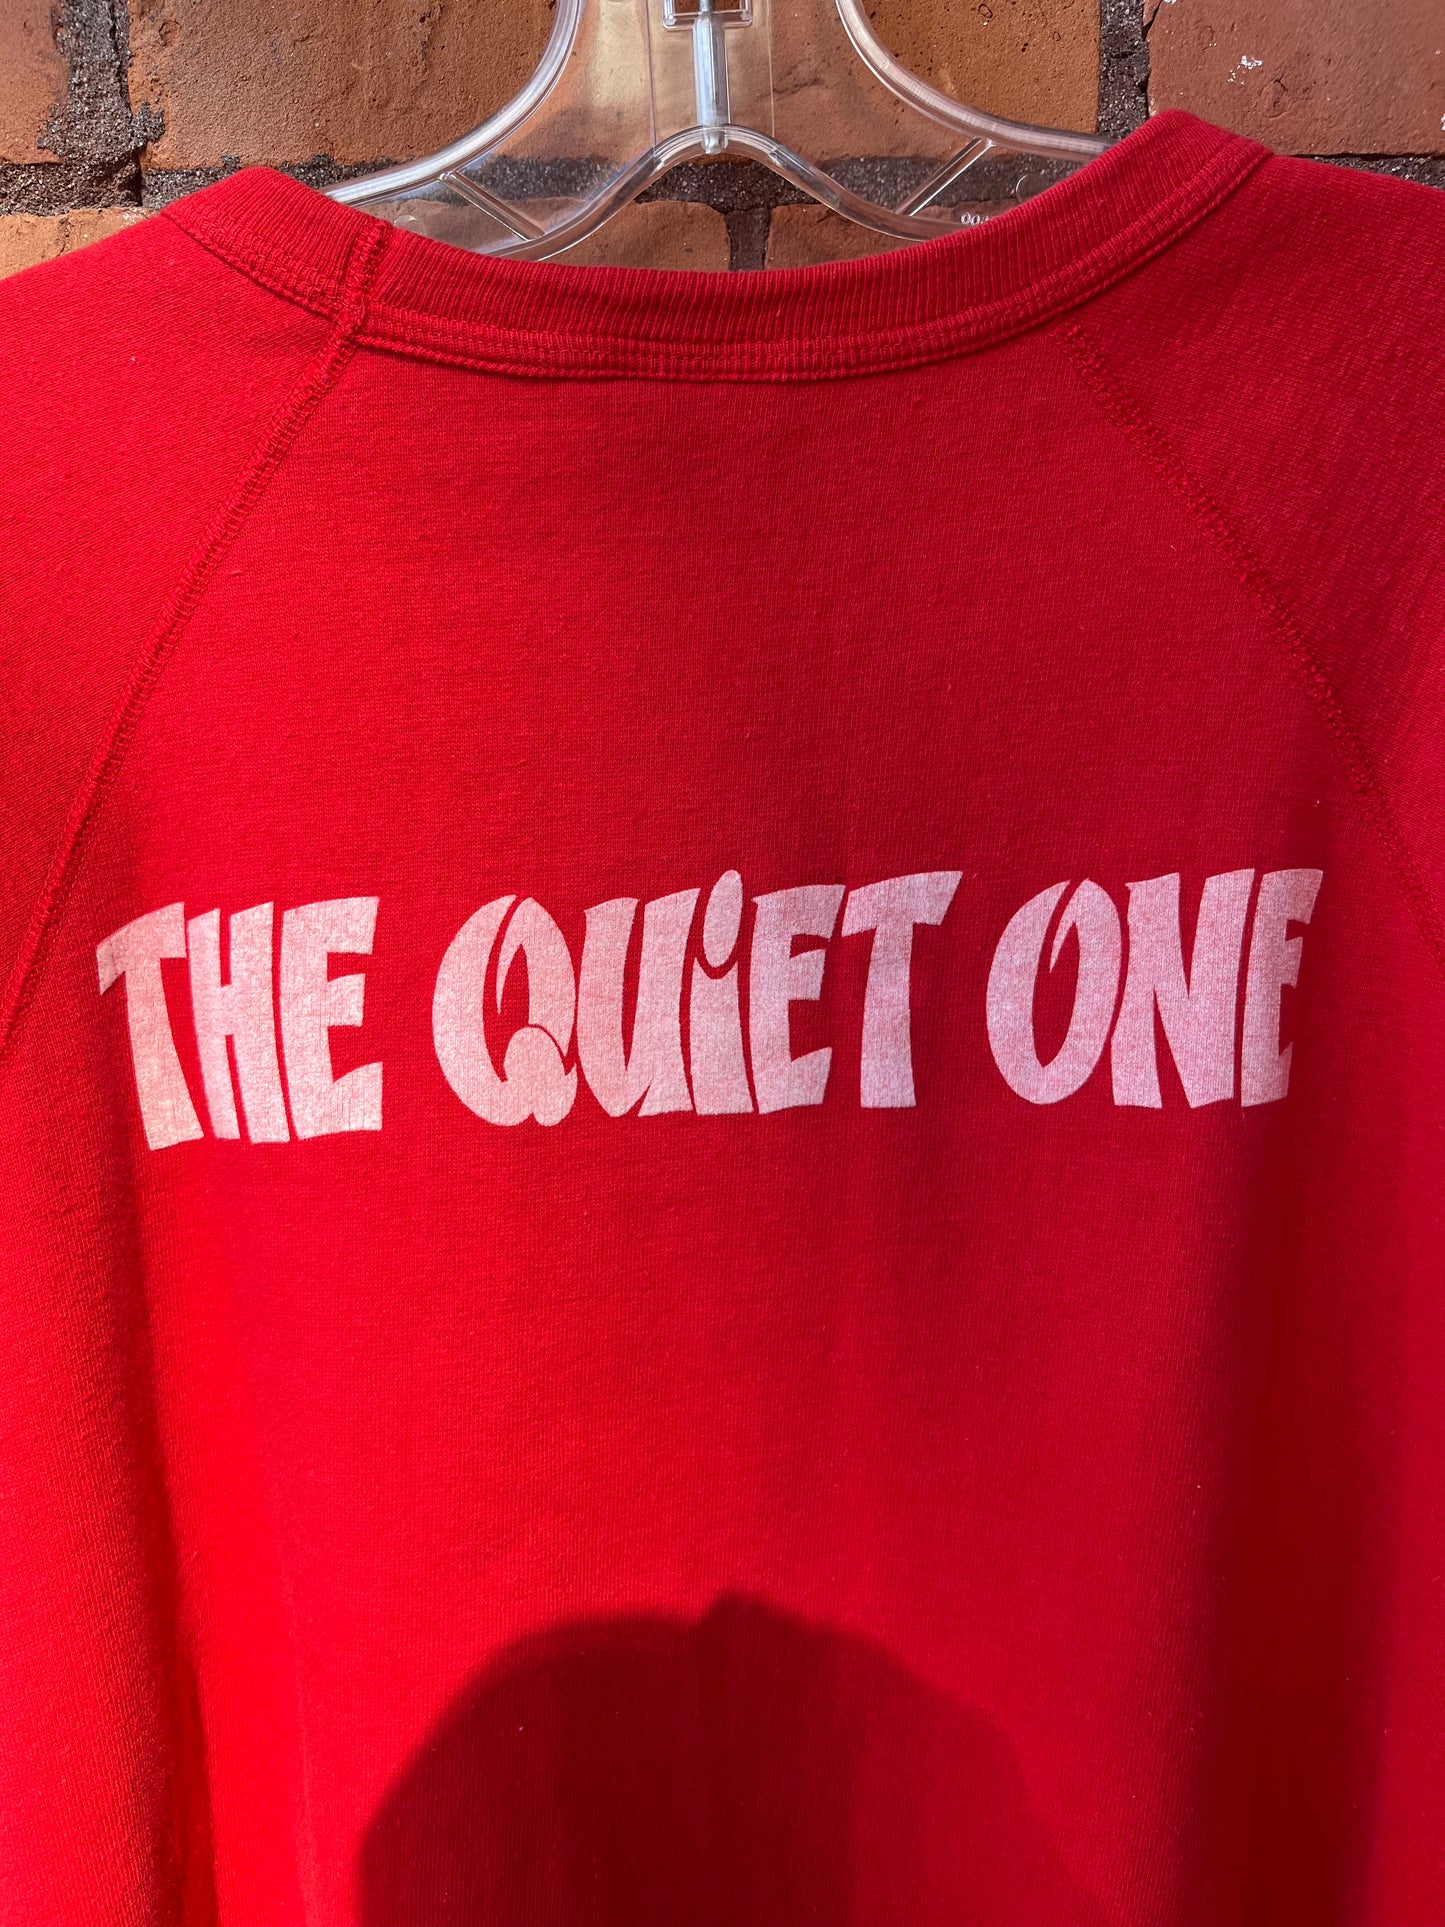 1983 Vintage Ottawa ‘The Quiet One’ School Bus Crew Sweater / Size XL